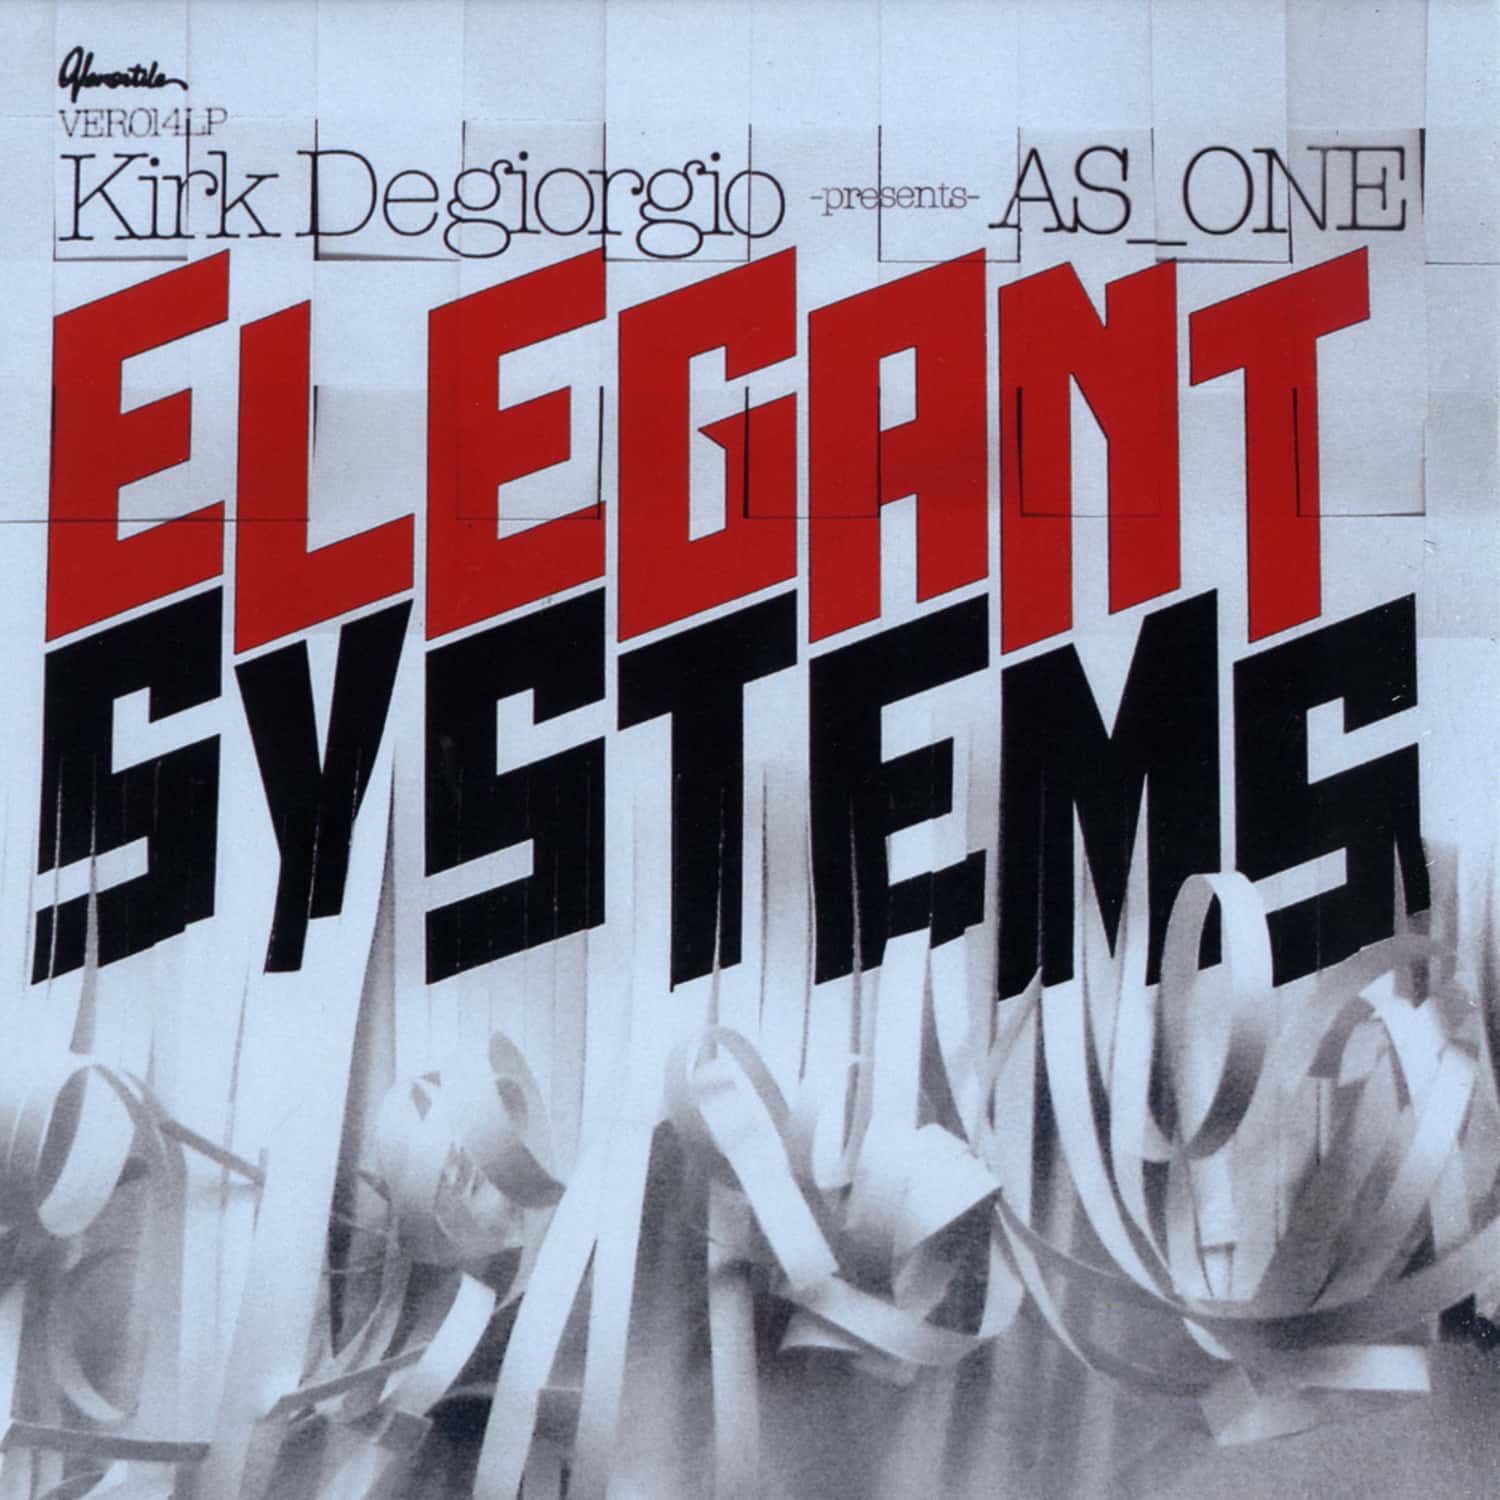 Kirk Degiorgio Pres. As One - ELEGANT SYSTEMS 